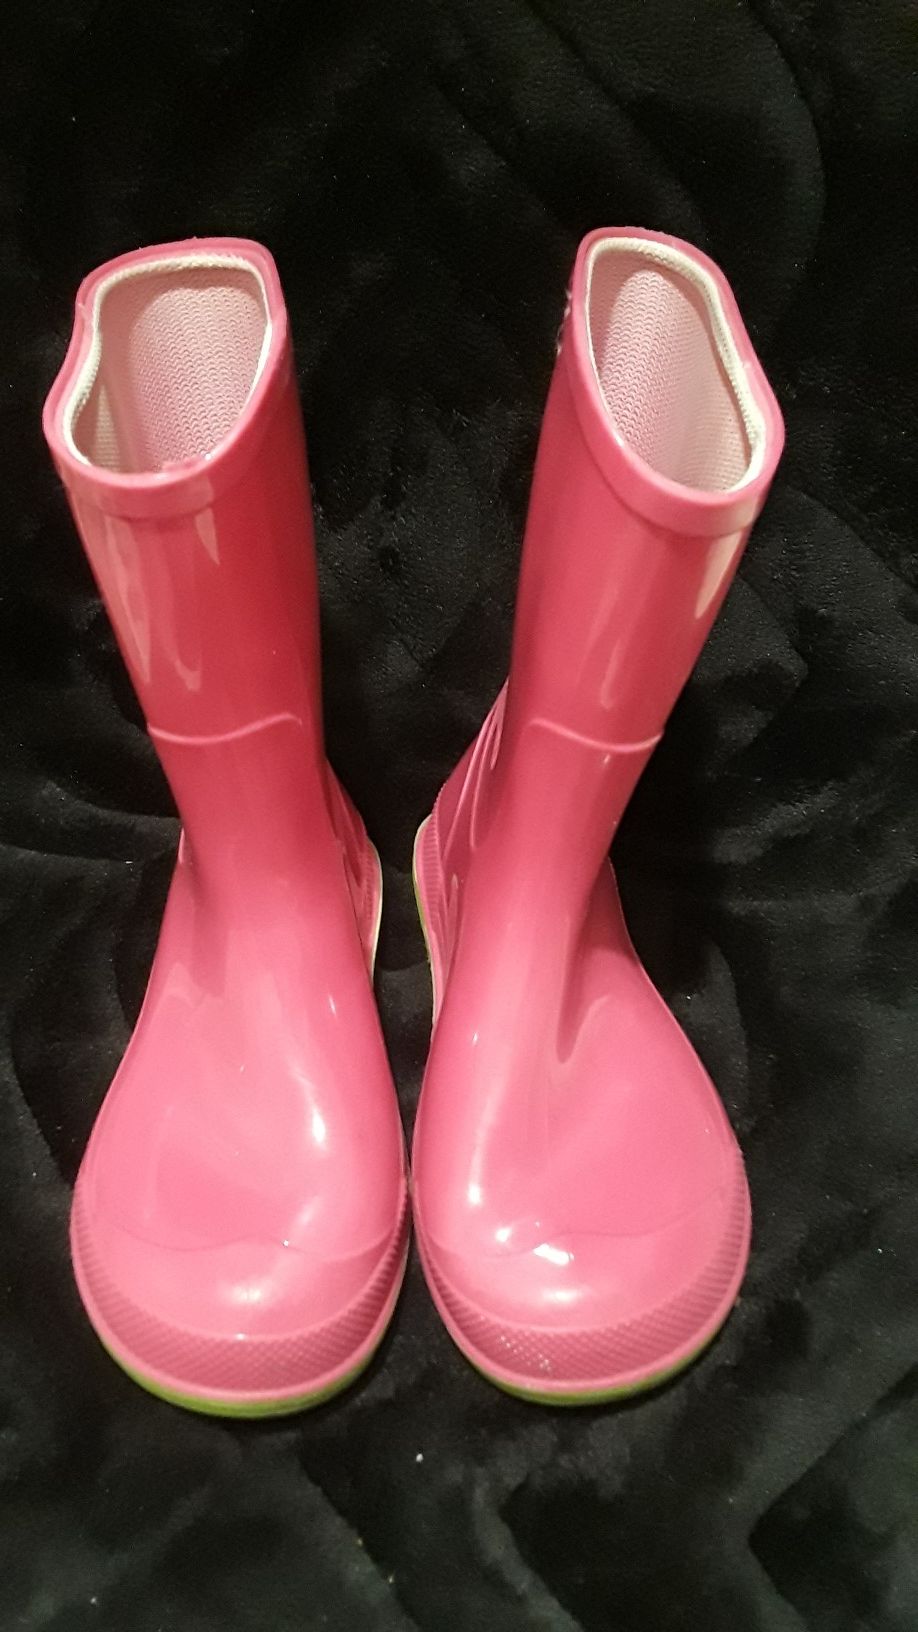 Pink Rain Boots